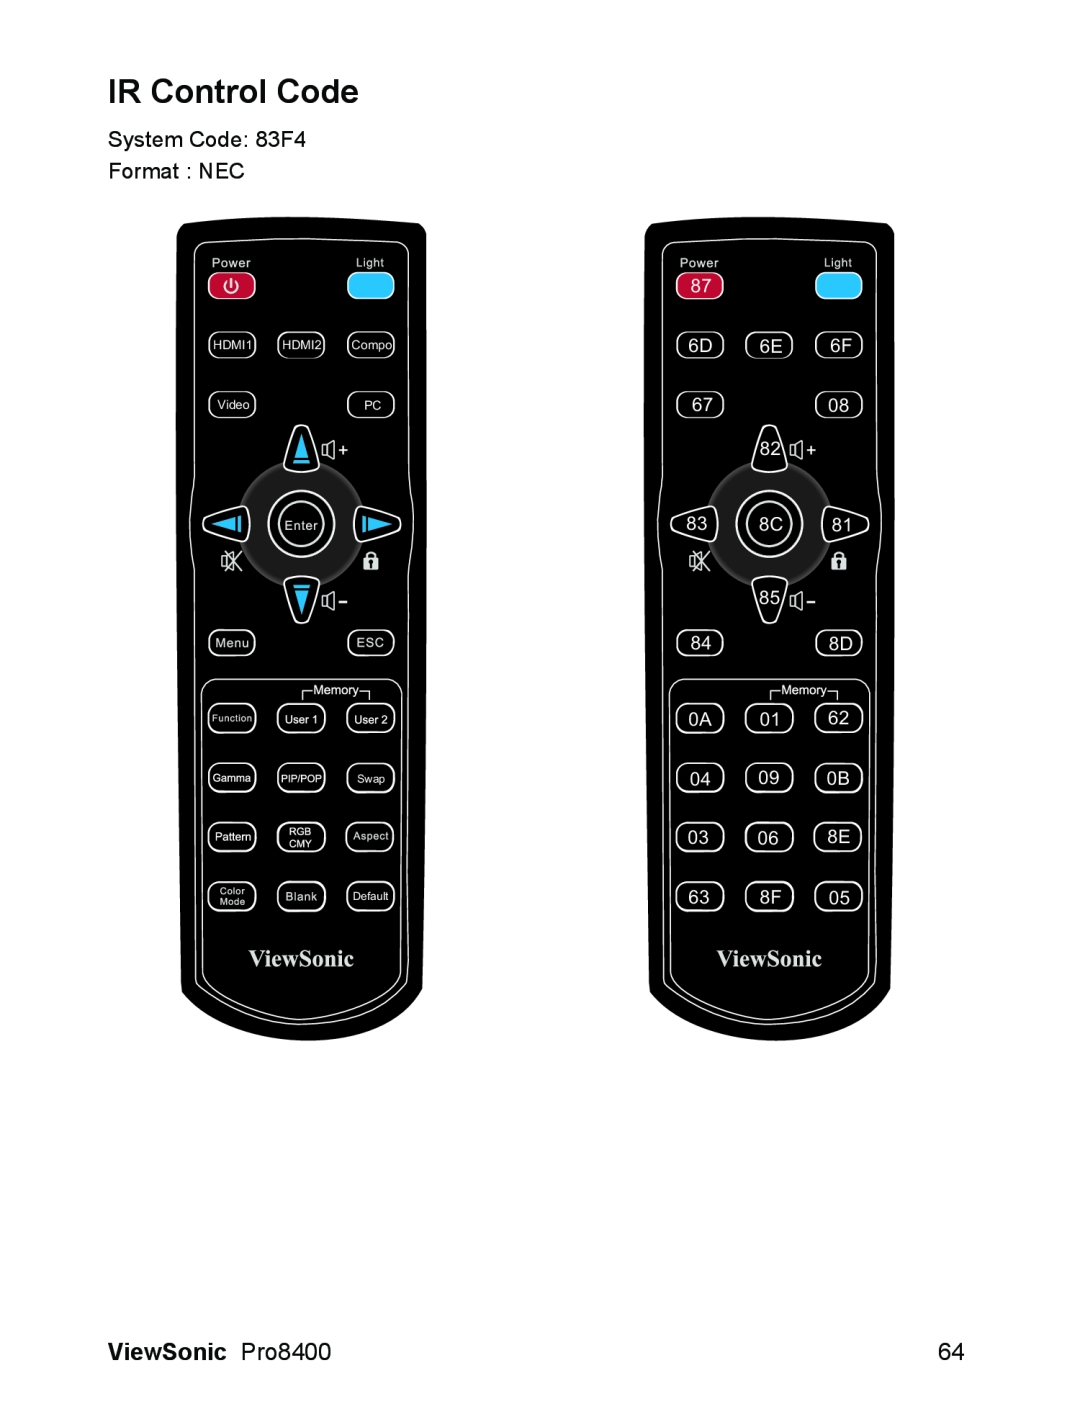 ViewSonic VS13647 IR Control Code, ViewSonic Pro8400, System Code 83F4 Format NEC, HDMI1 HDMI2 Compo VideoPC, Swap Default 